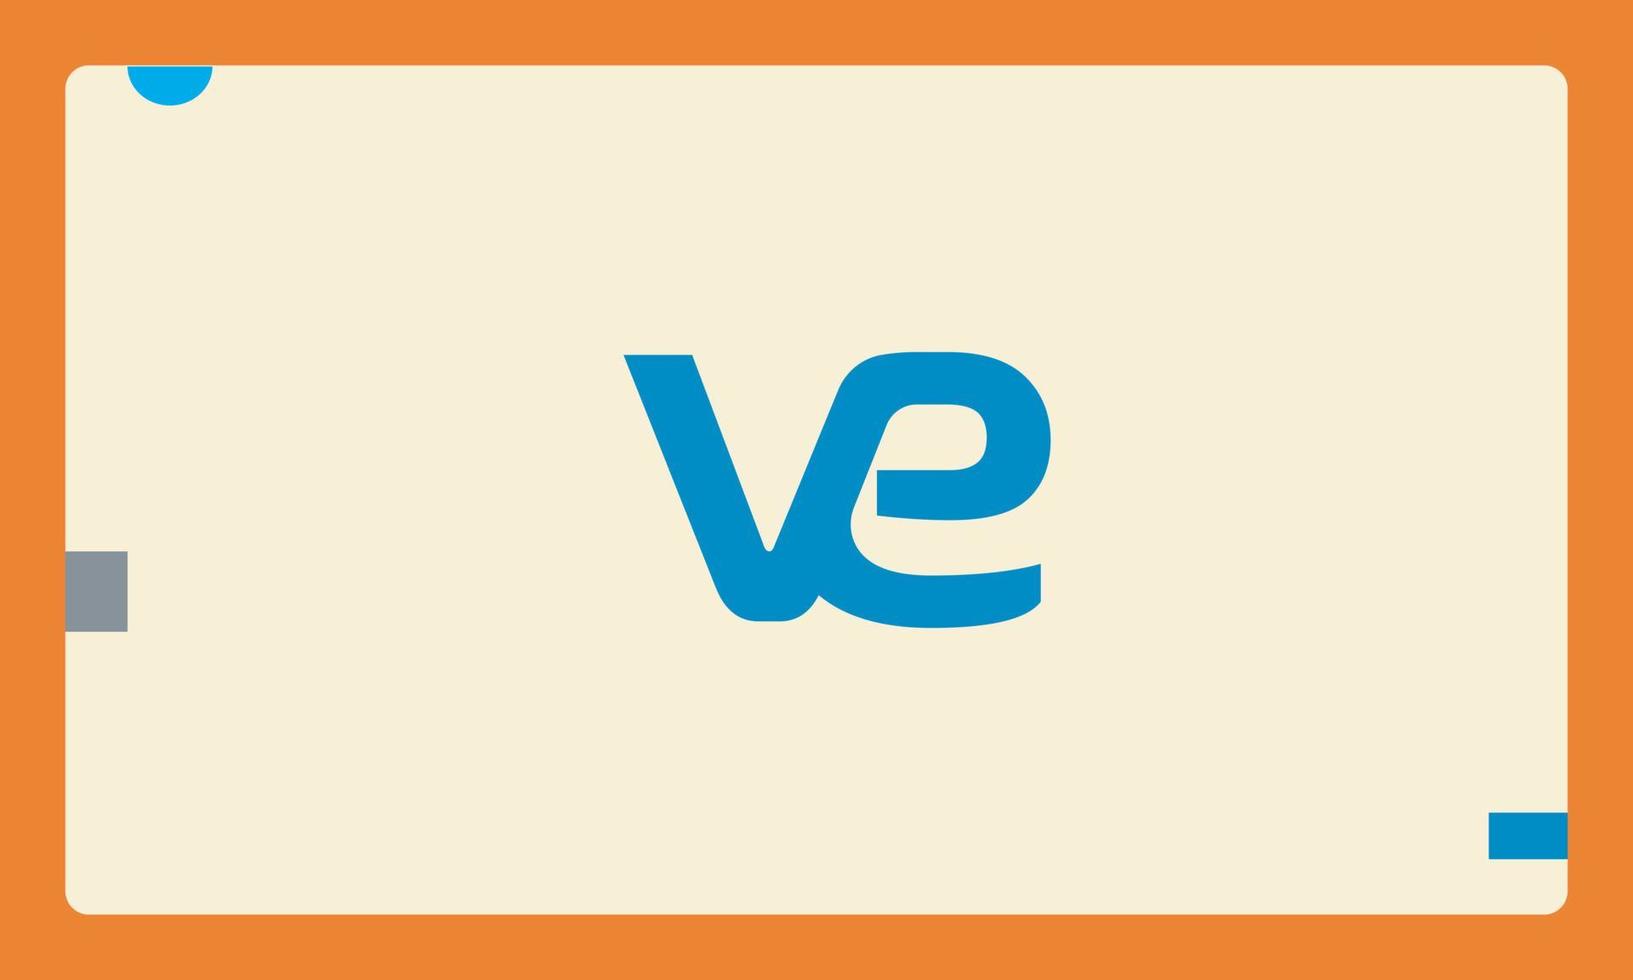 letras do alfabeto iniciais monograma logotipo ve, ev, v e e vetor